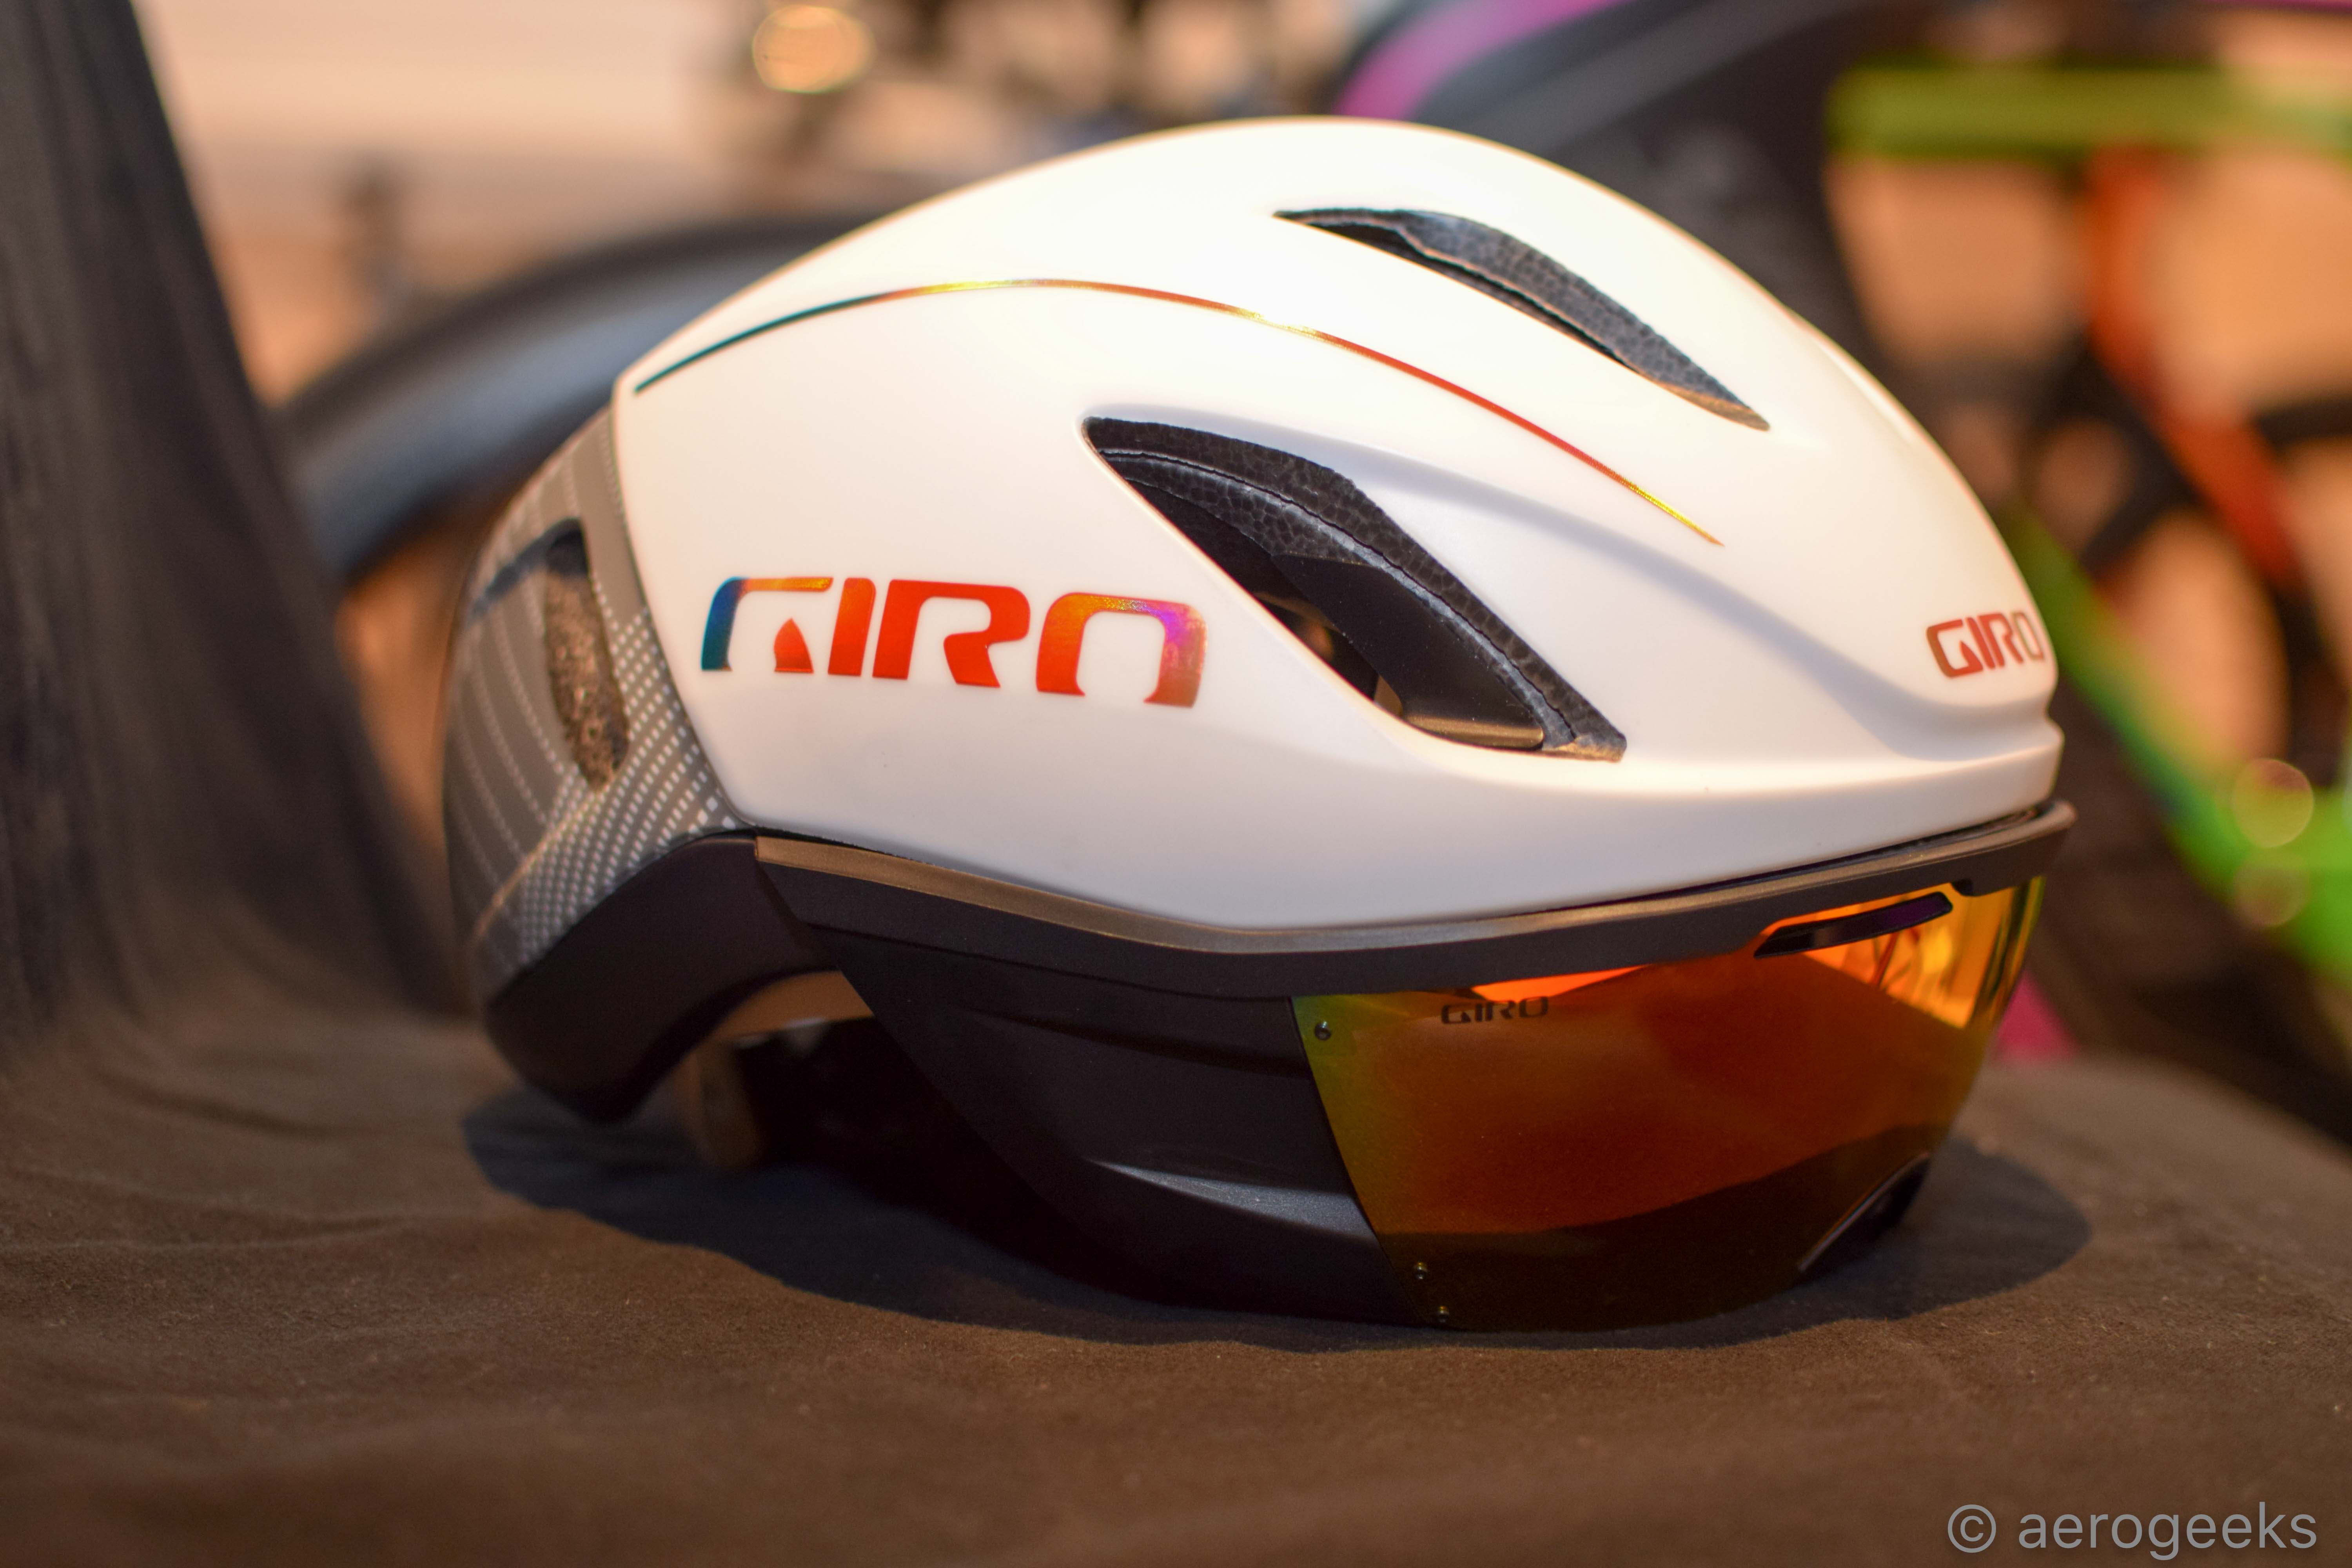 31200円 年末年始大決算 Giro Vanquish MIPS Adult Road Cycling Helmet - Medium 55-59 cm Matte Bla好評販売中